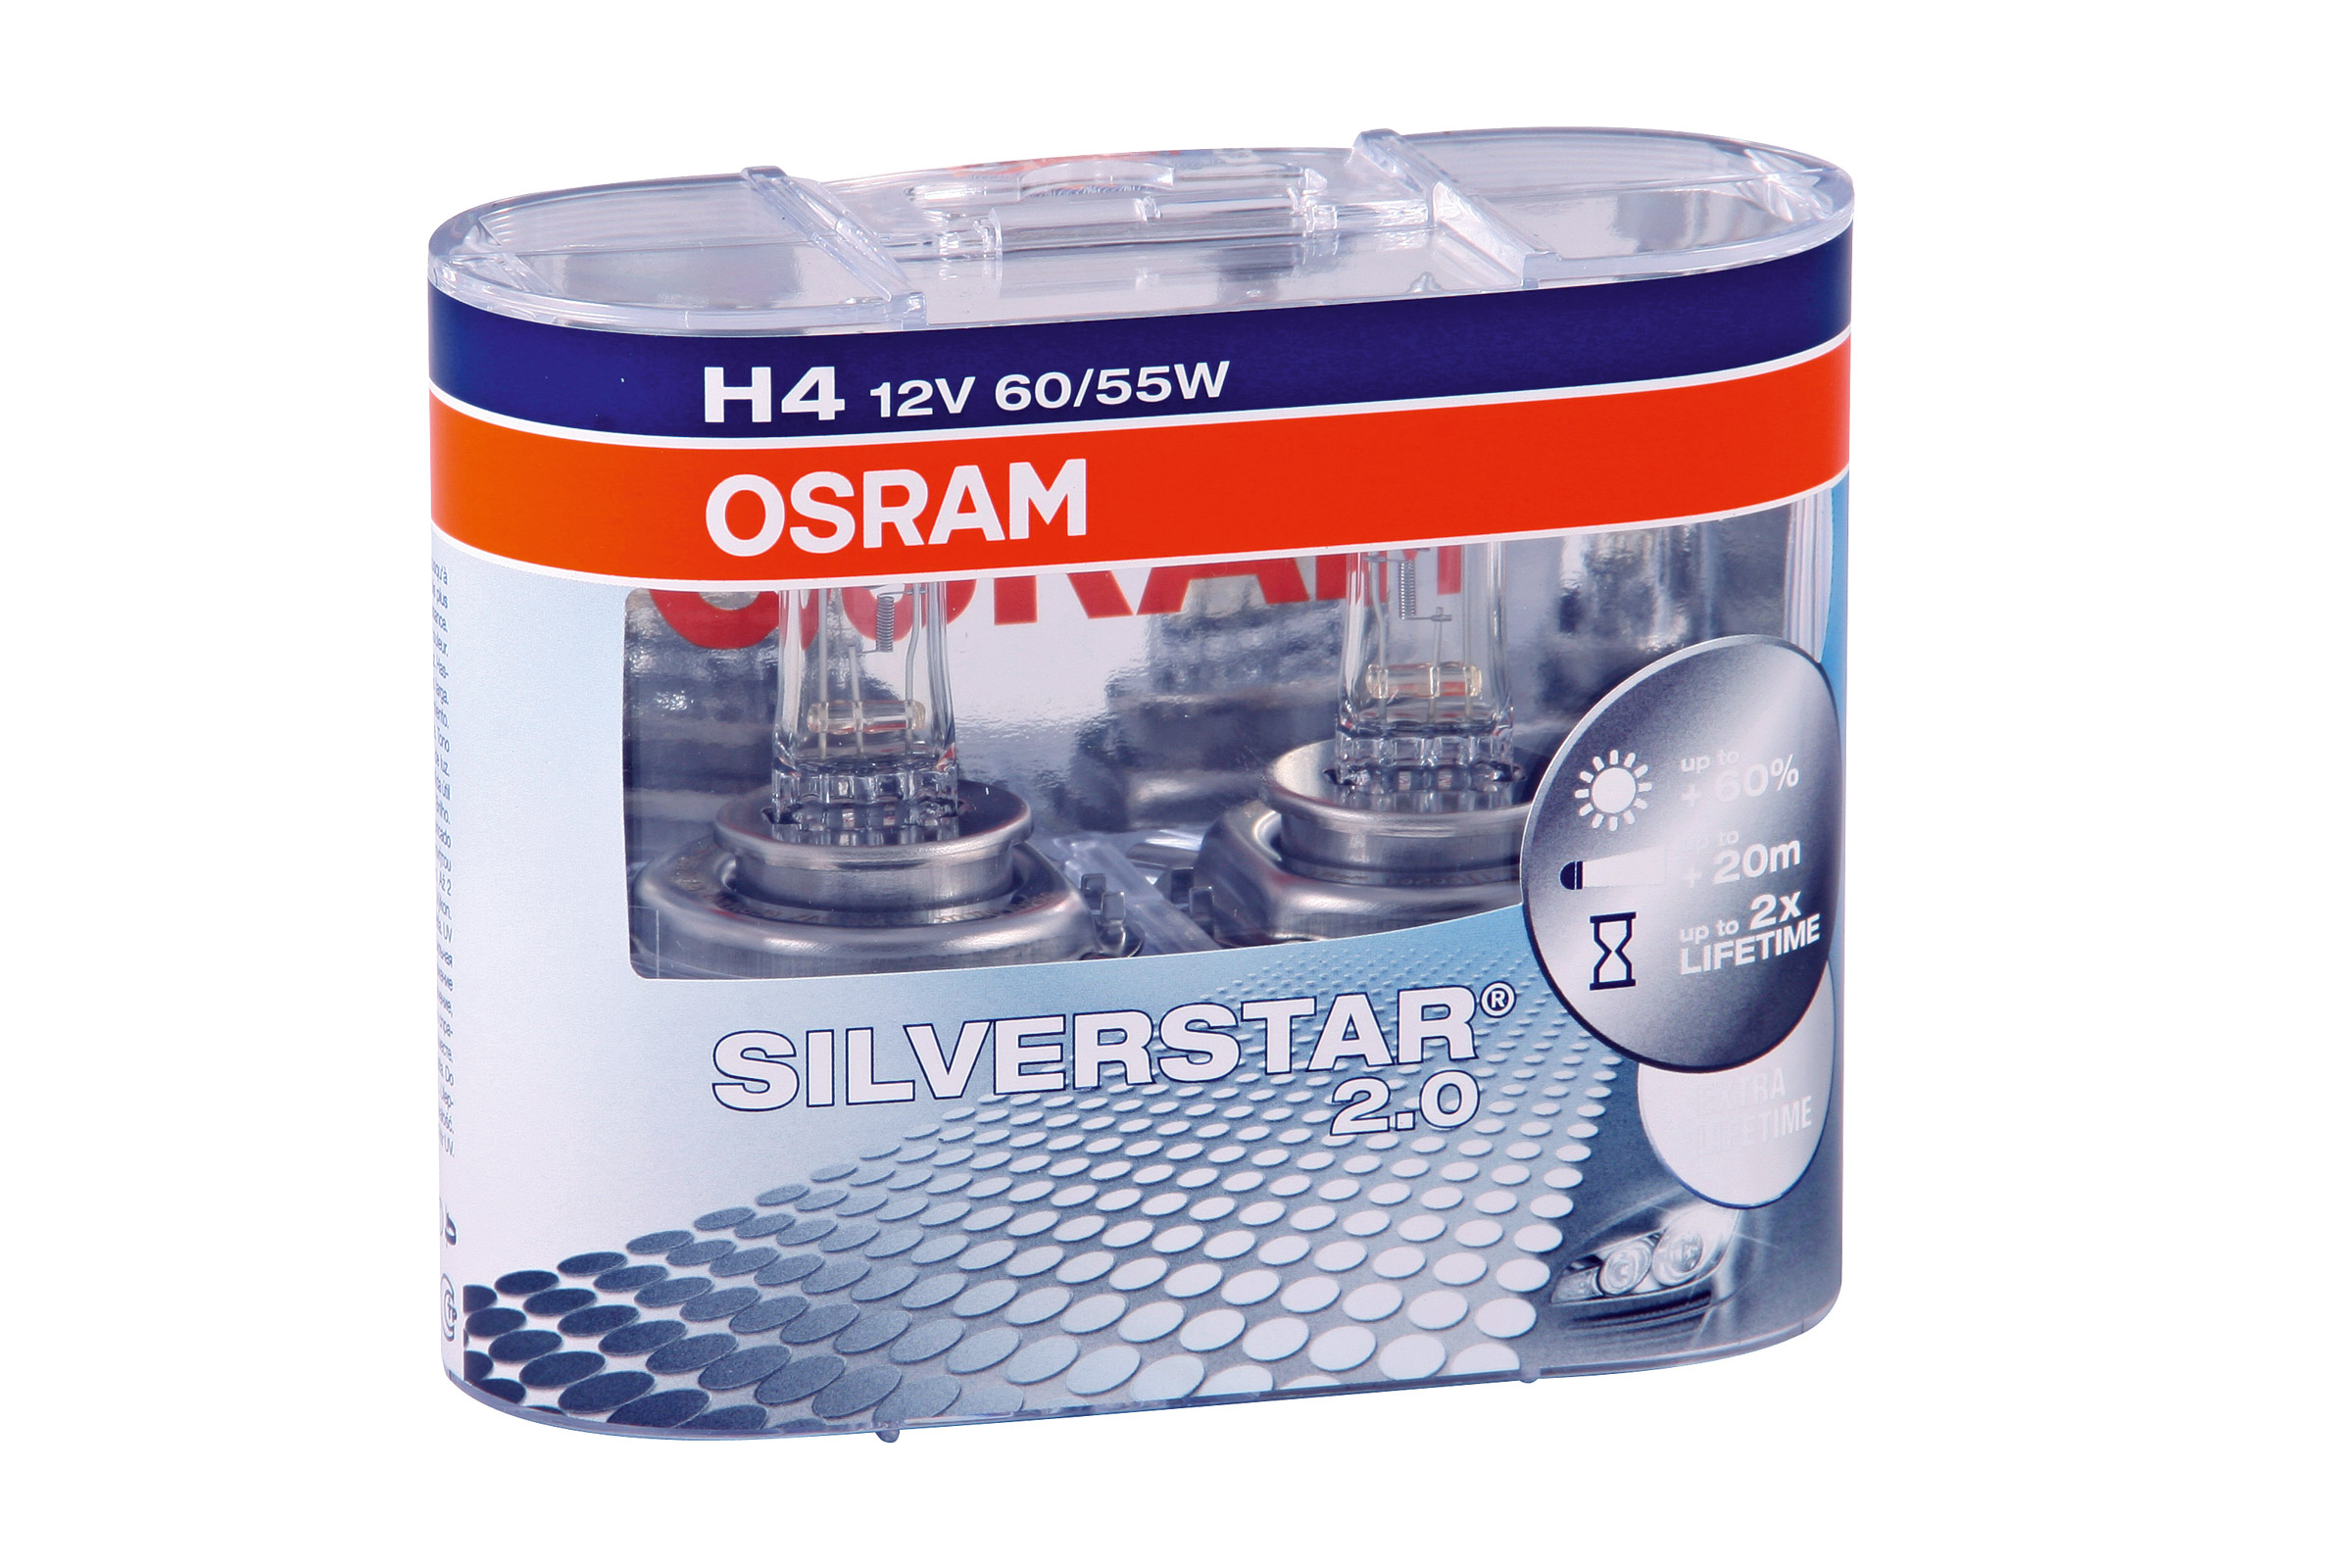 Osram Silverstar 2.0  Auto Express